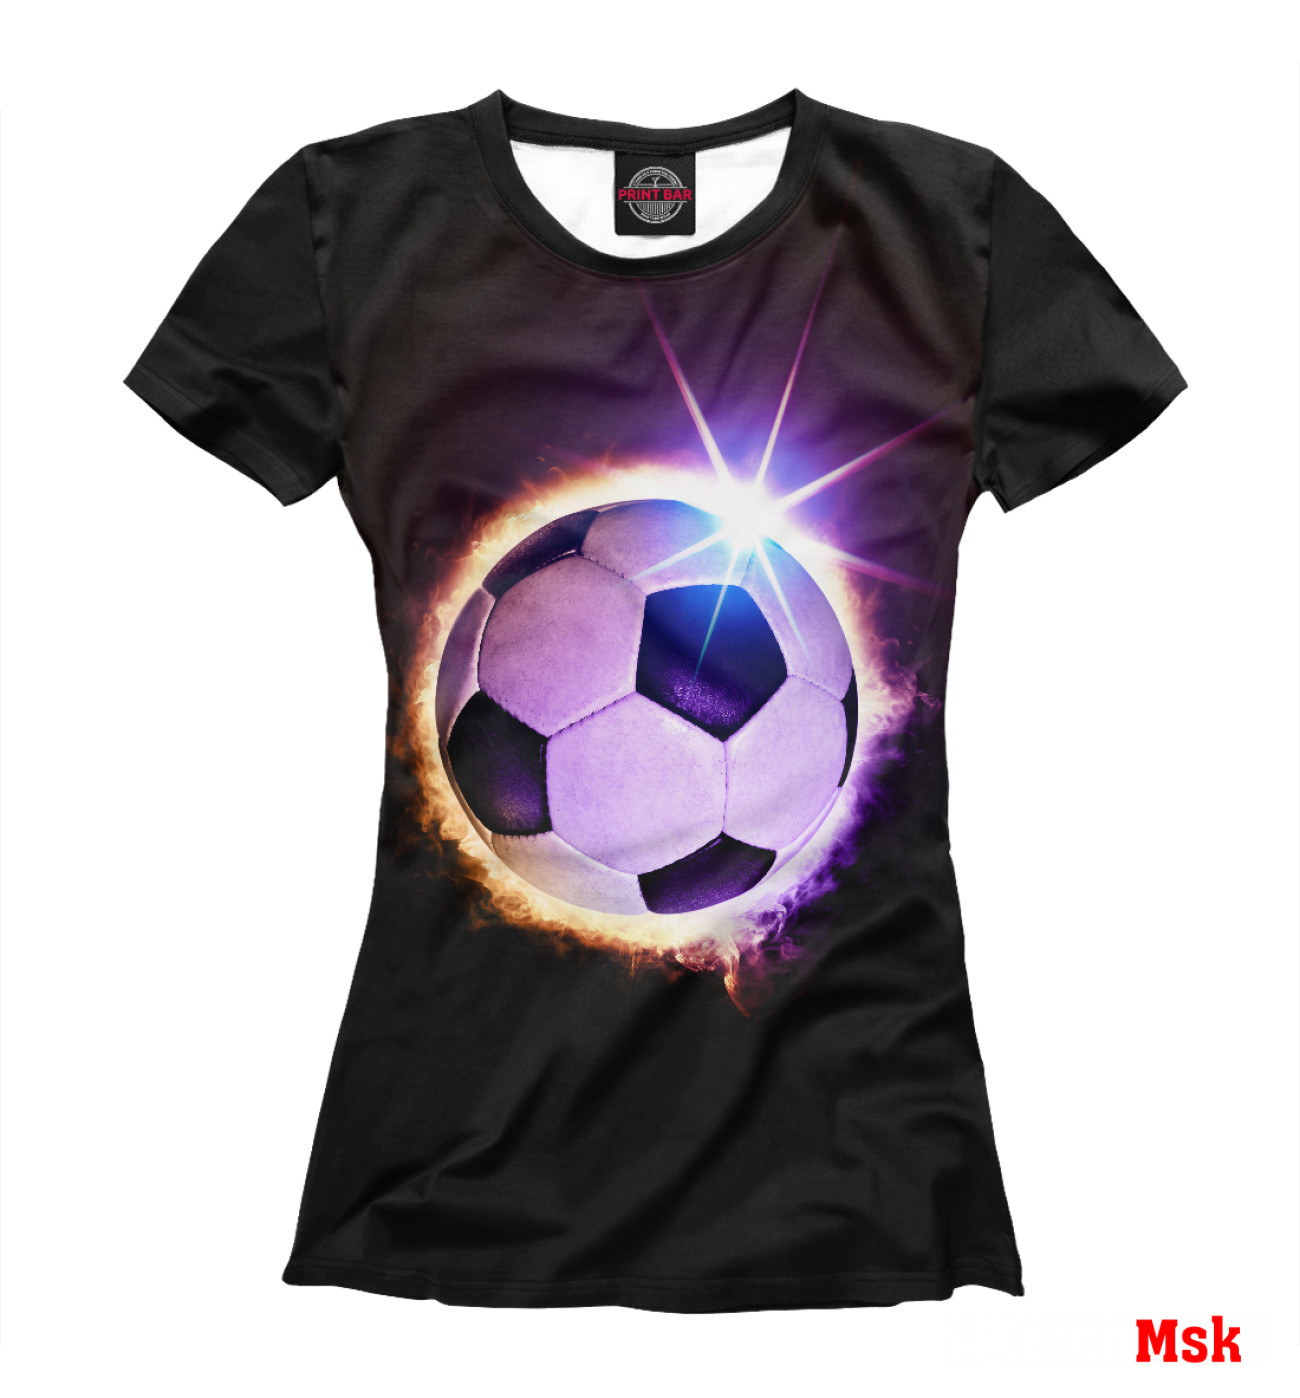 Женская Футболка Победный мяч, артикул: FTO-366777-fut-1